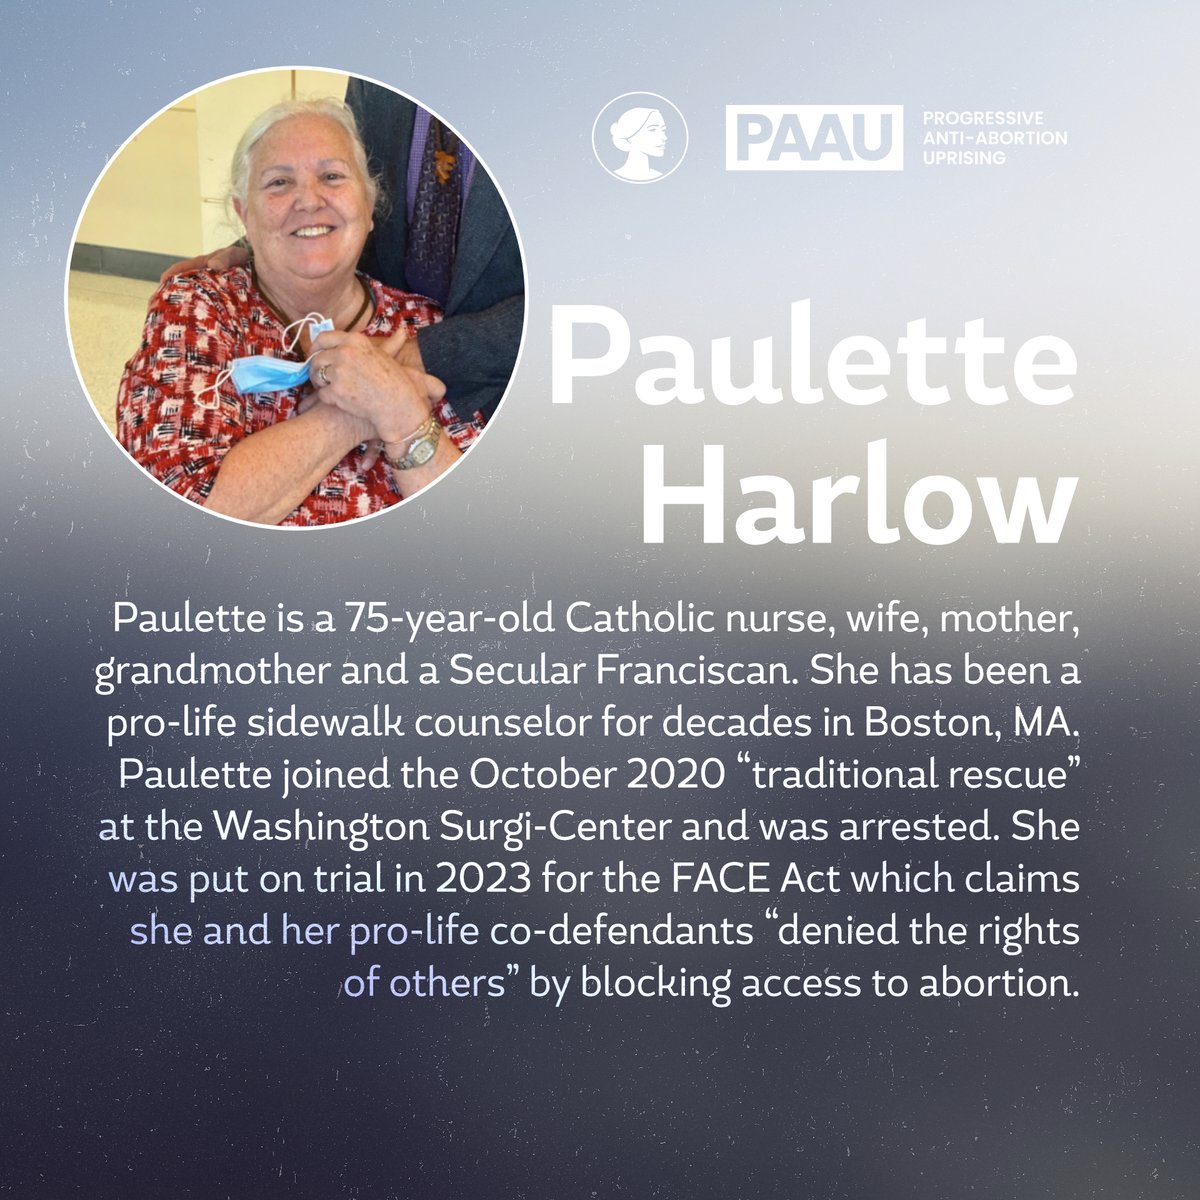 8. Paulette Harlow